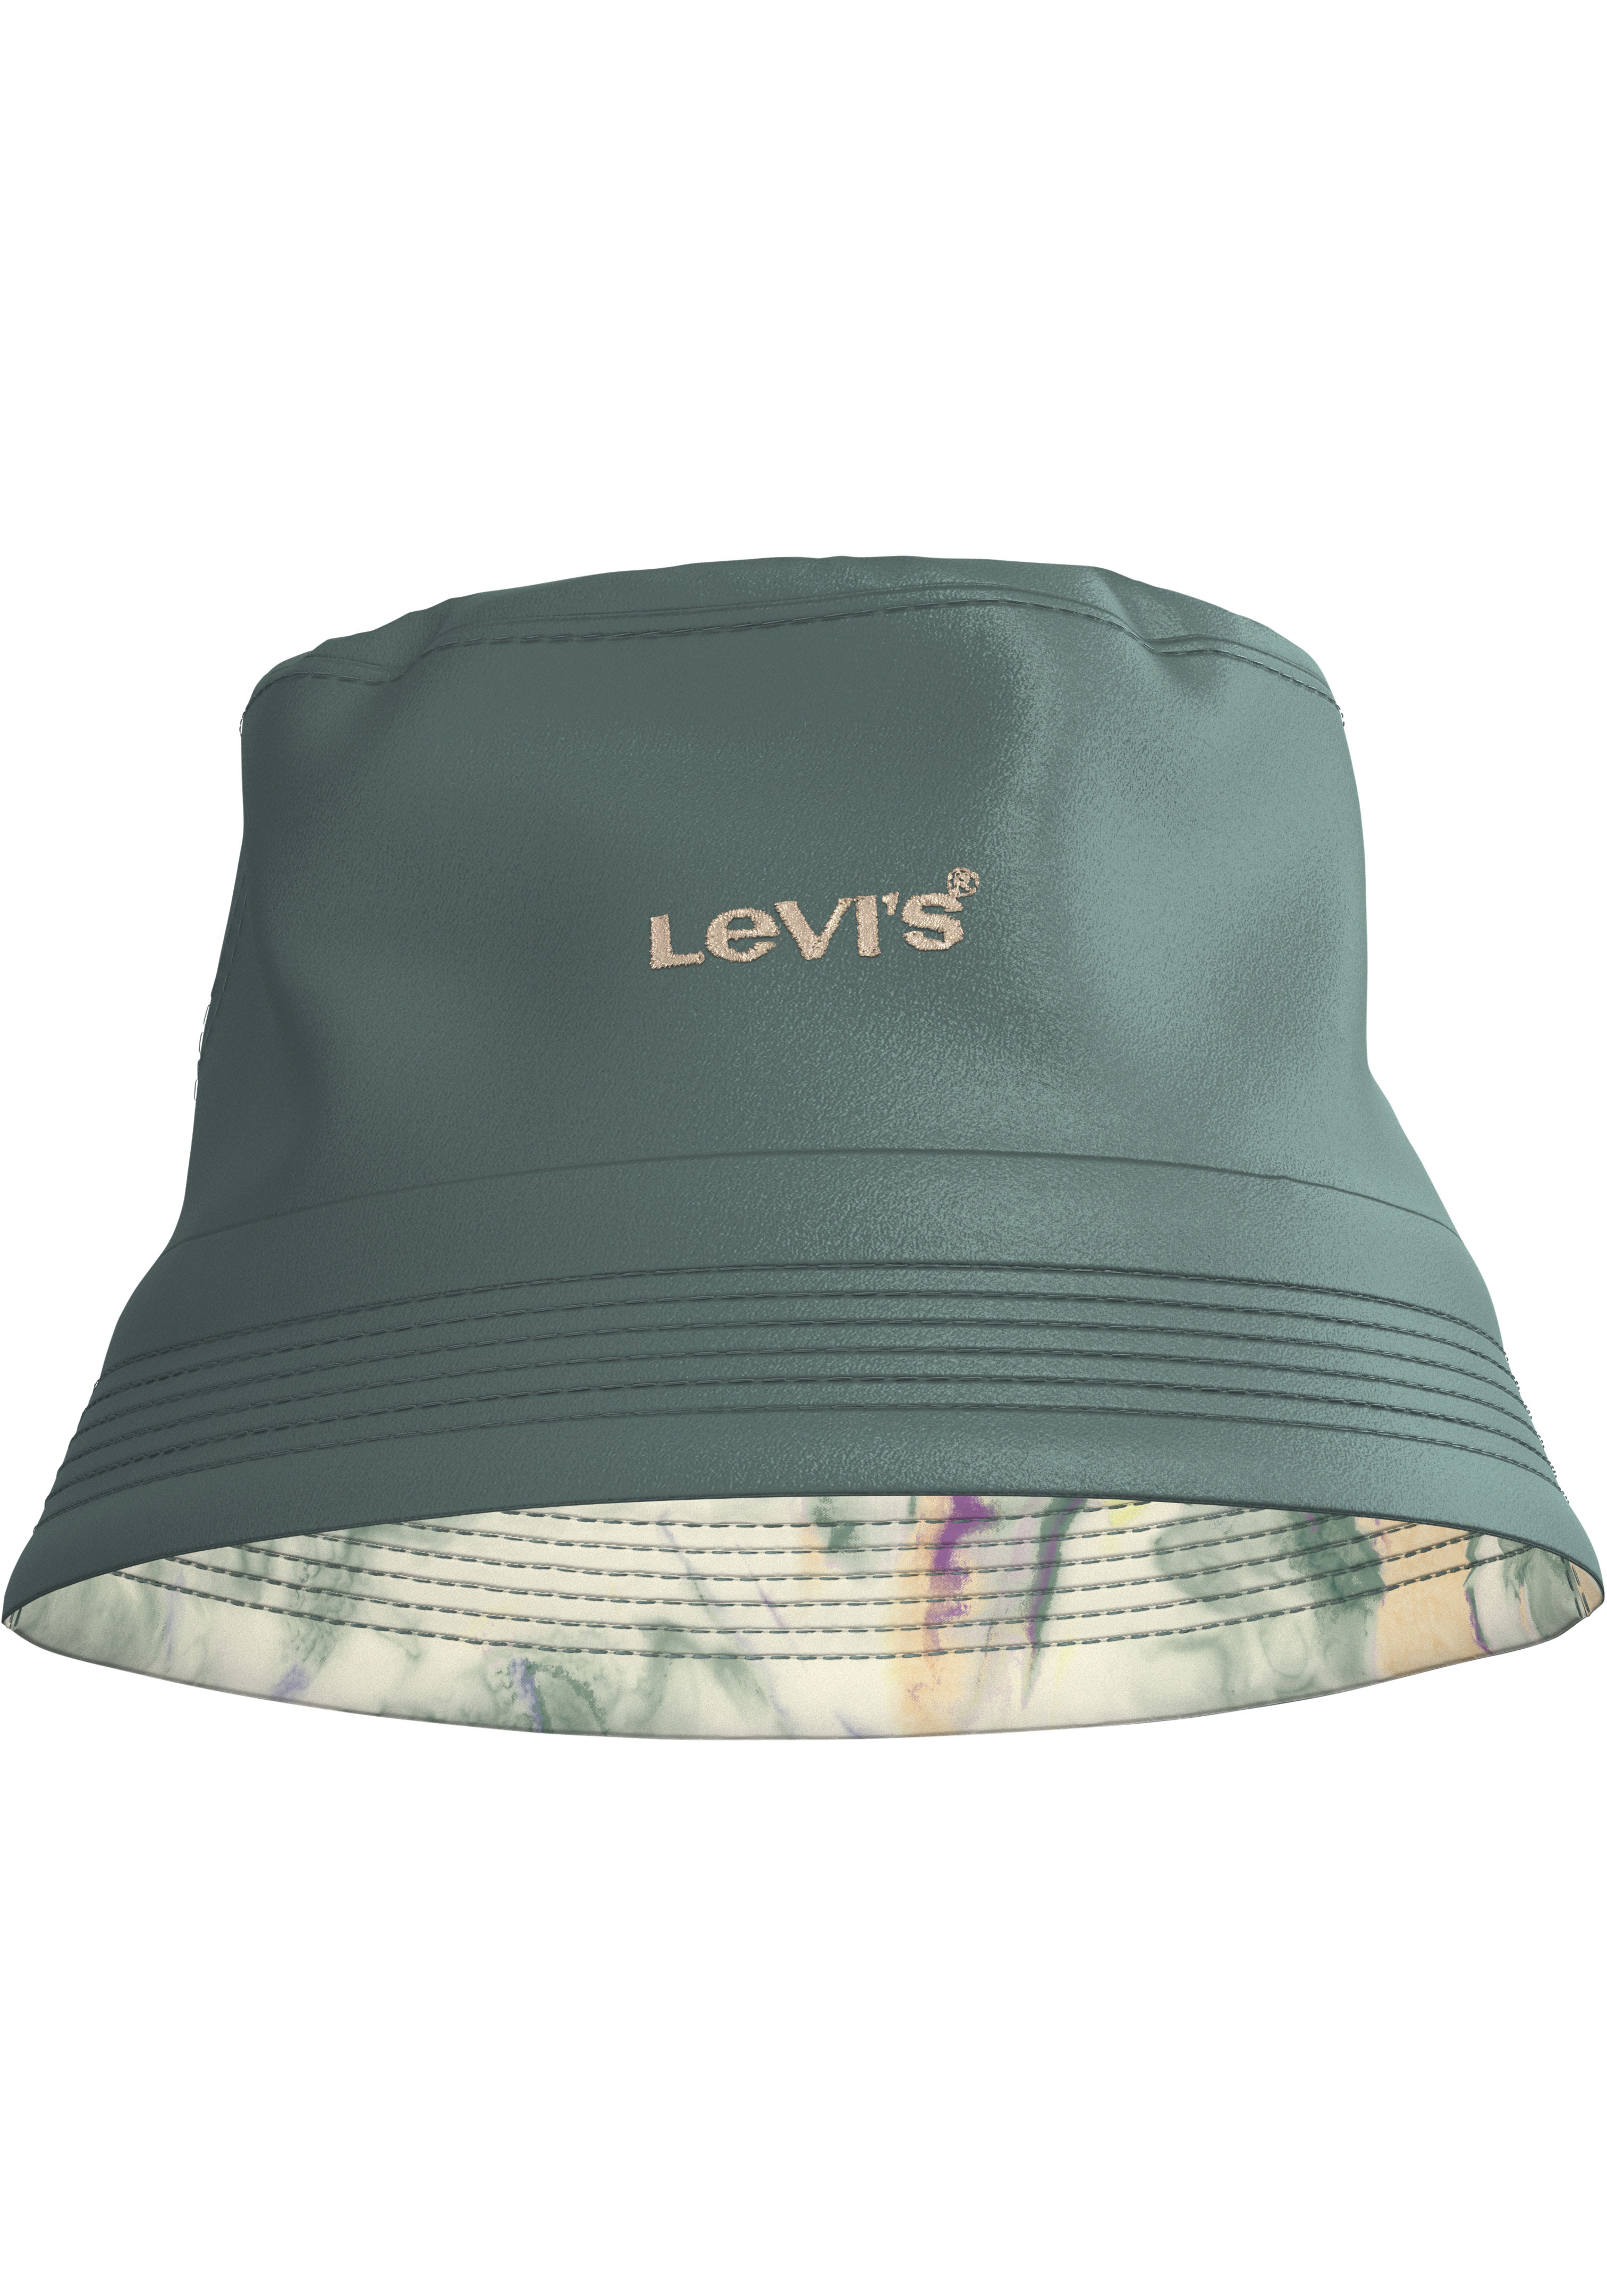 Levi's Reversible Bucket Hat